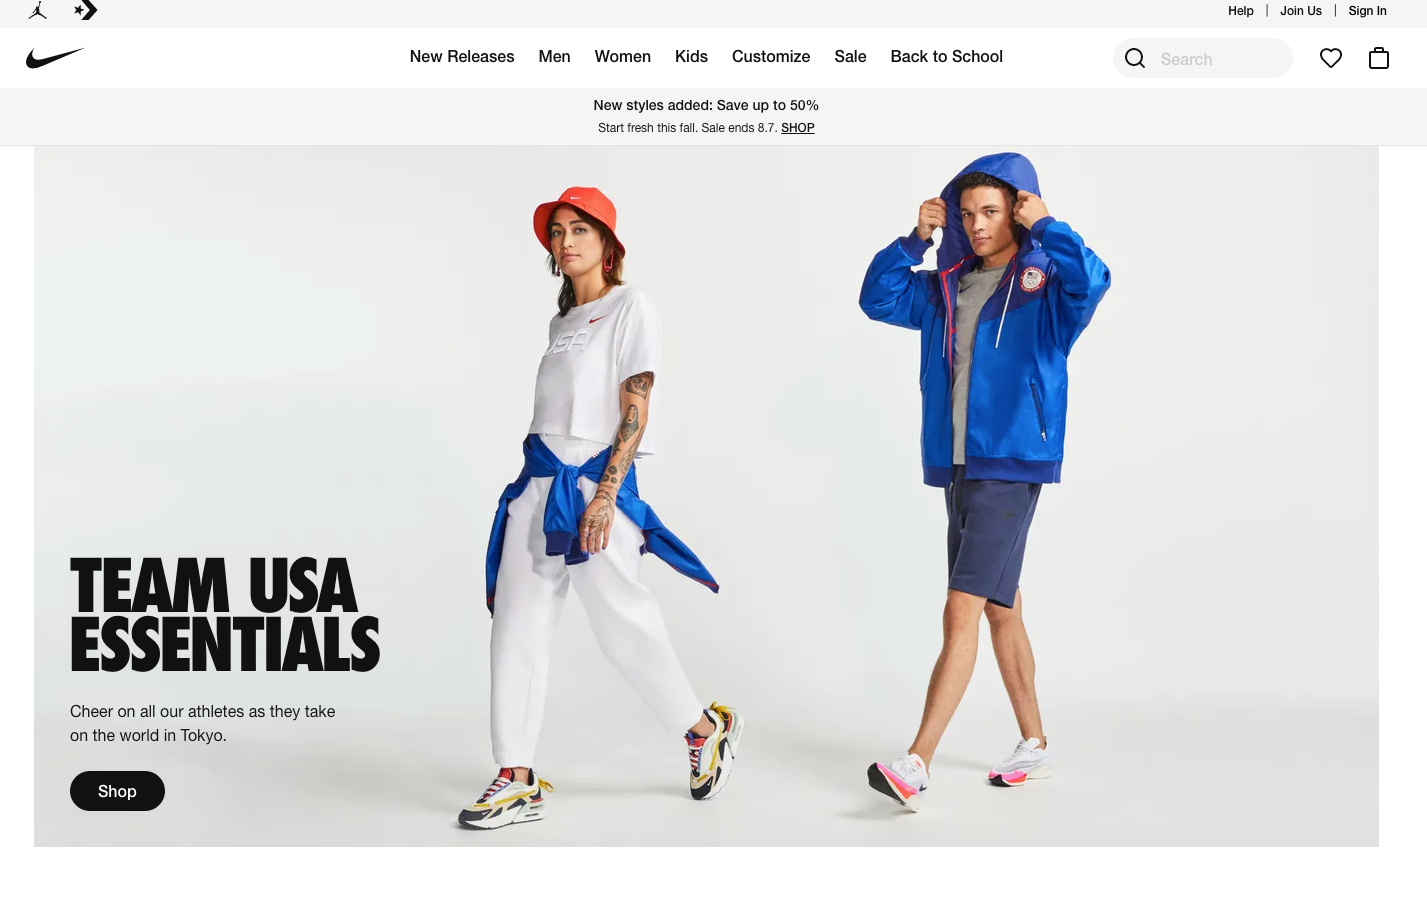 Nike uses the minimalism modern web design trend